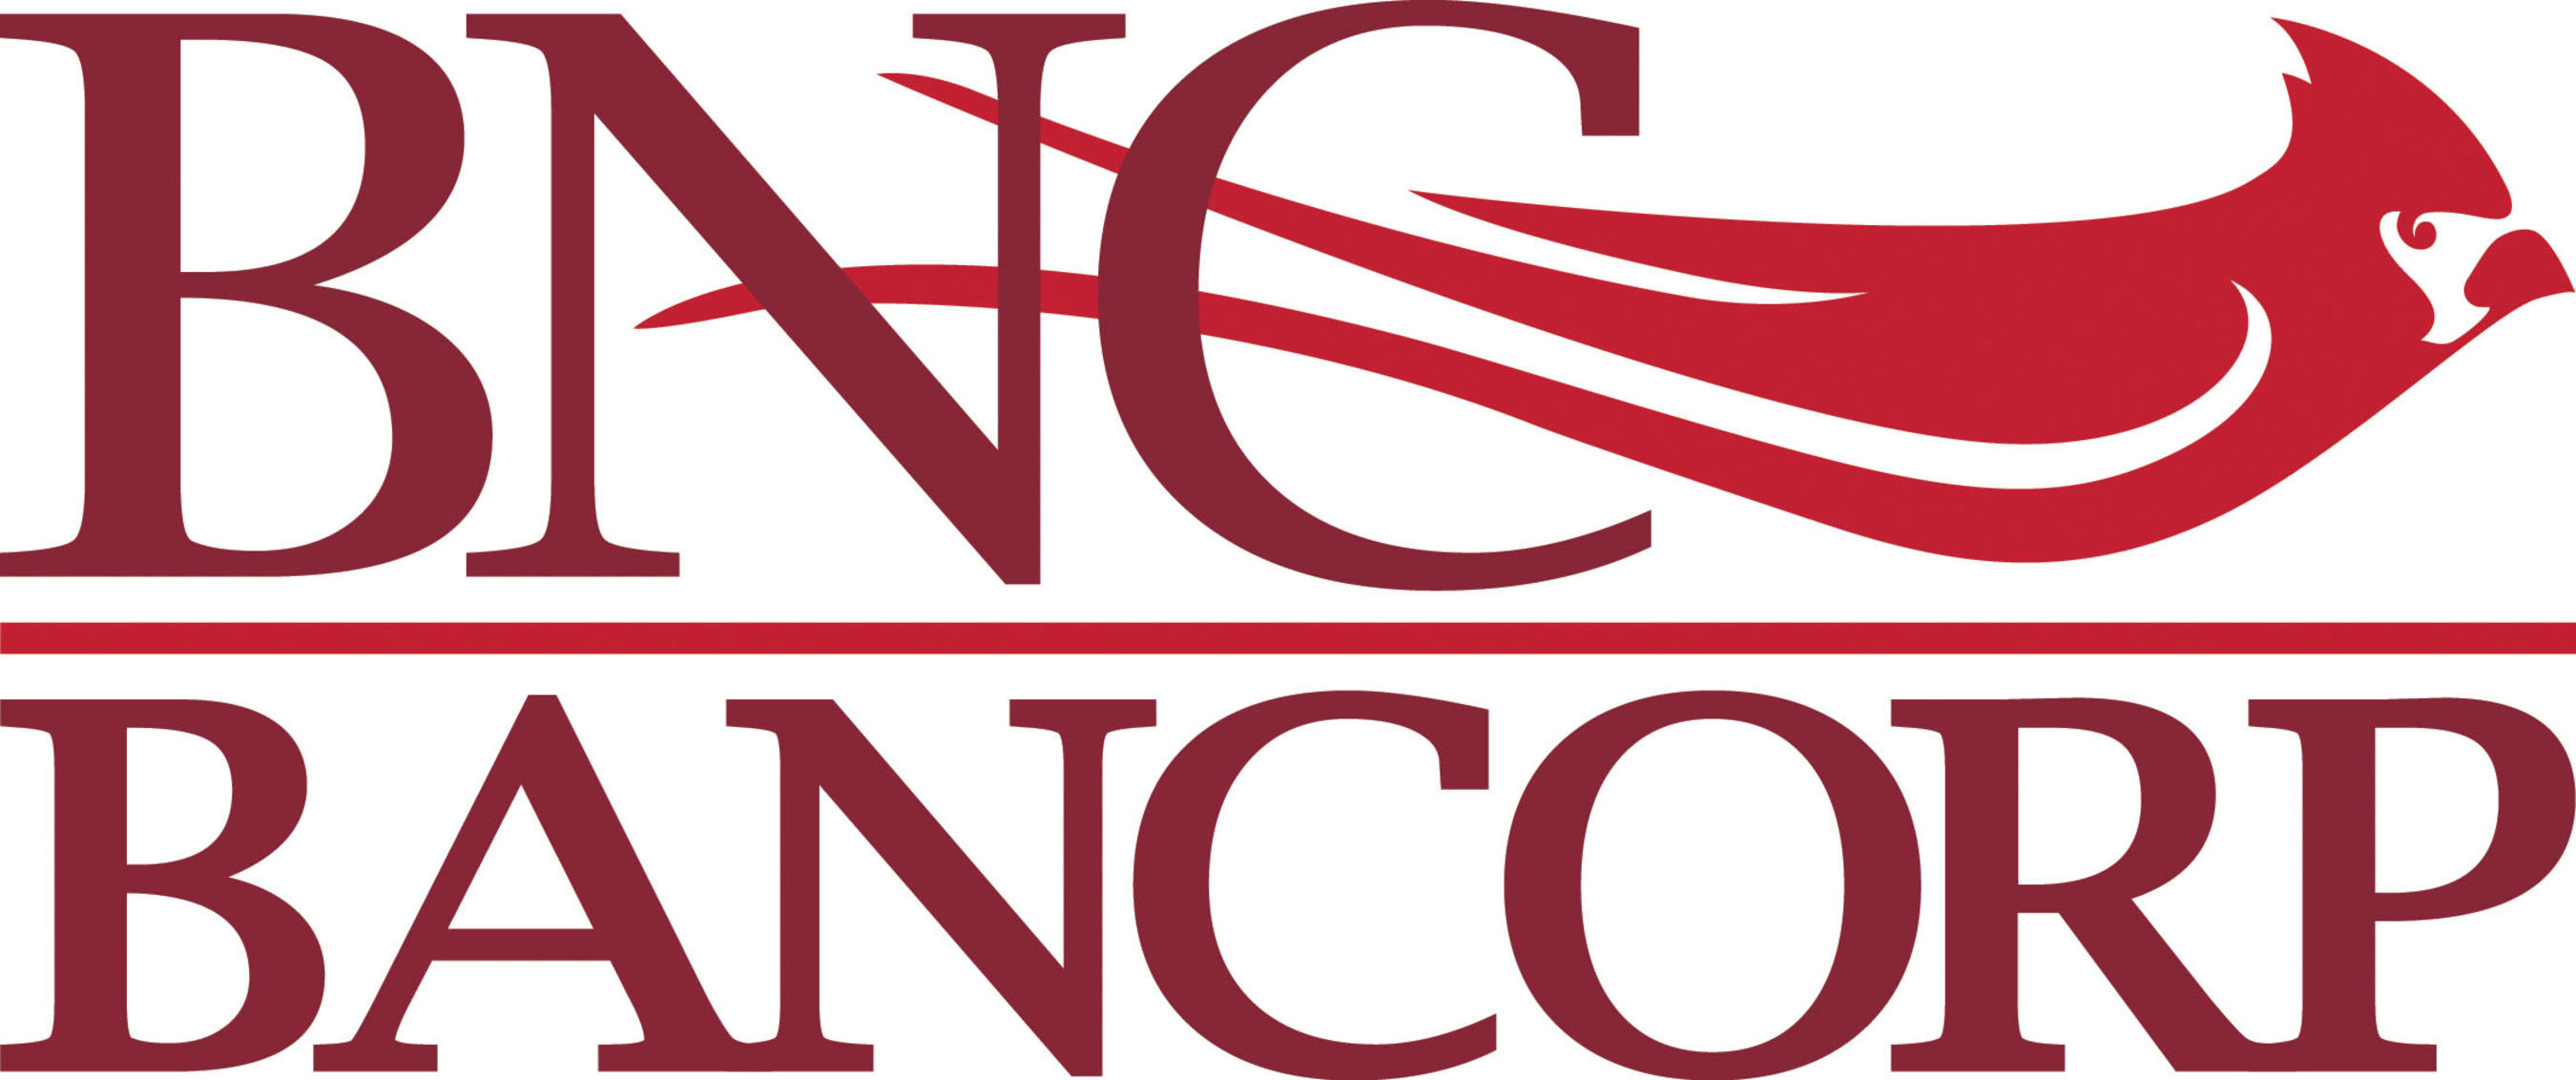 BNC Bancorp logo. BNC Bancorp is a one-bank holding company for Bank of North Carolina. (PRNewsFoto/BNC Bancorp) (PRNewsFoto/BNC BANCORP)